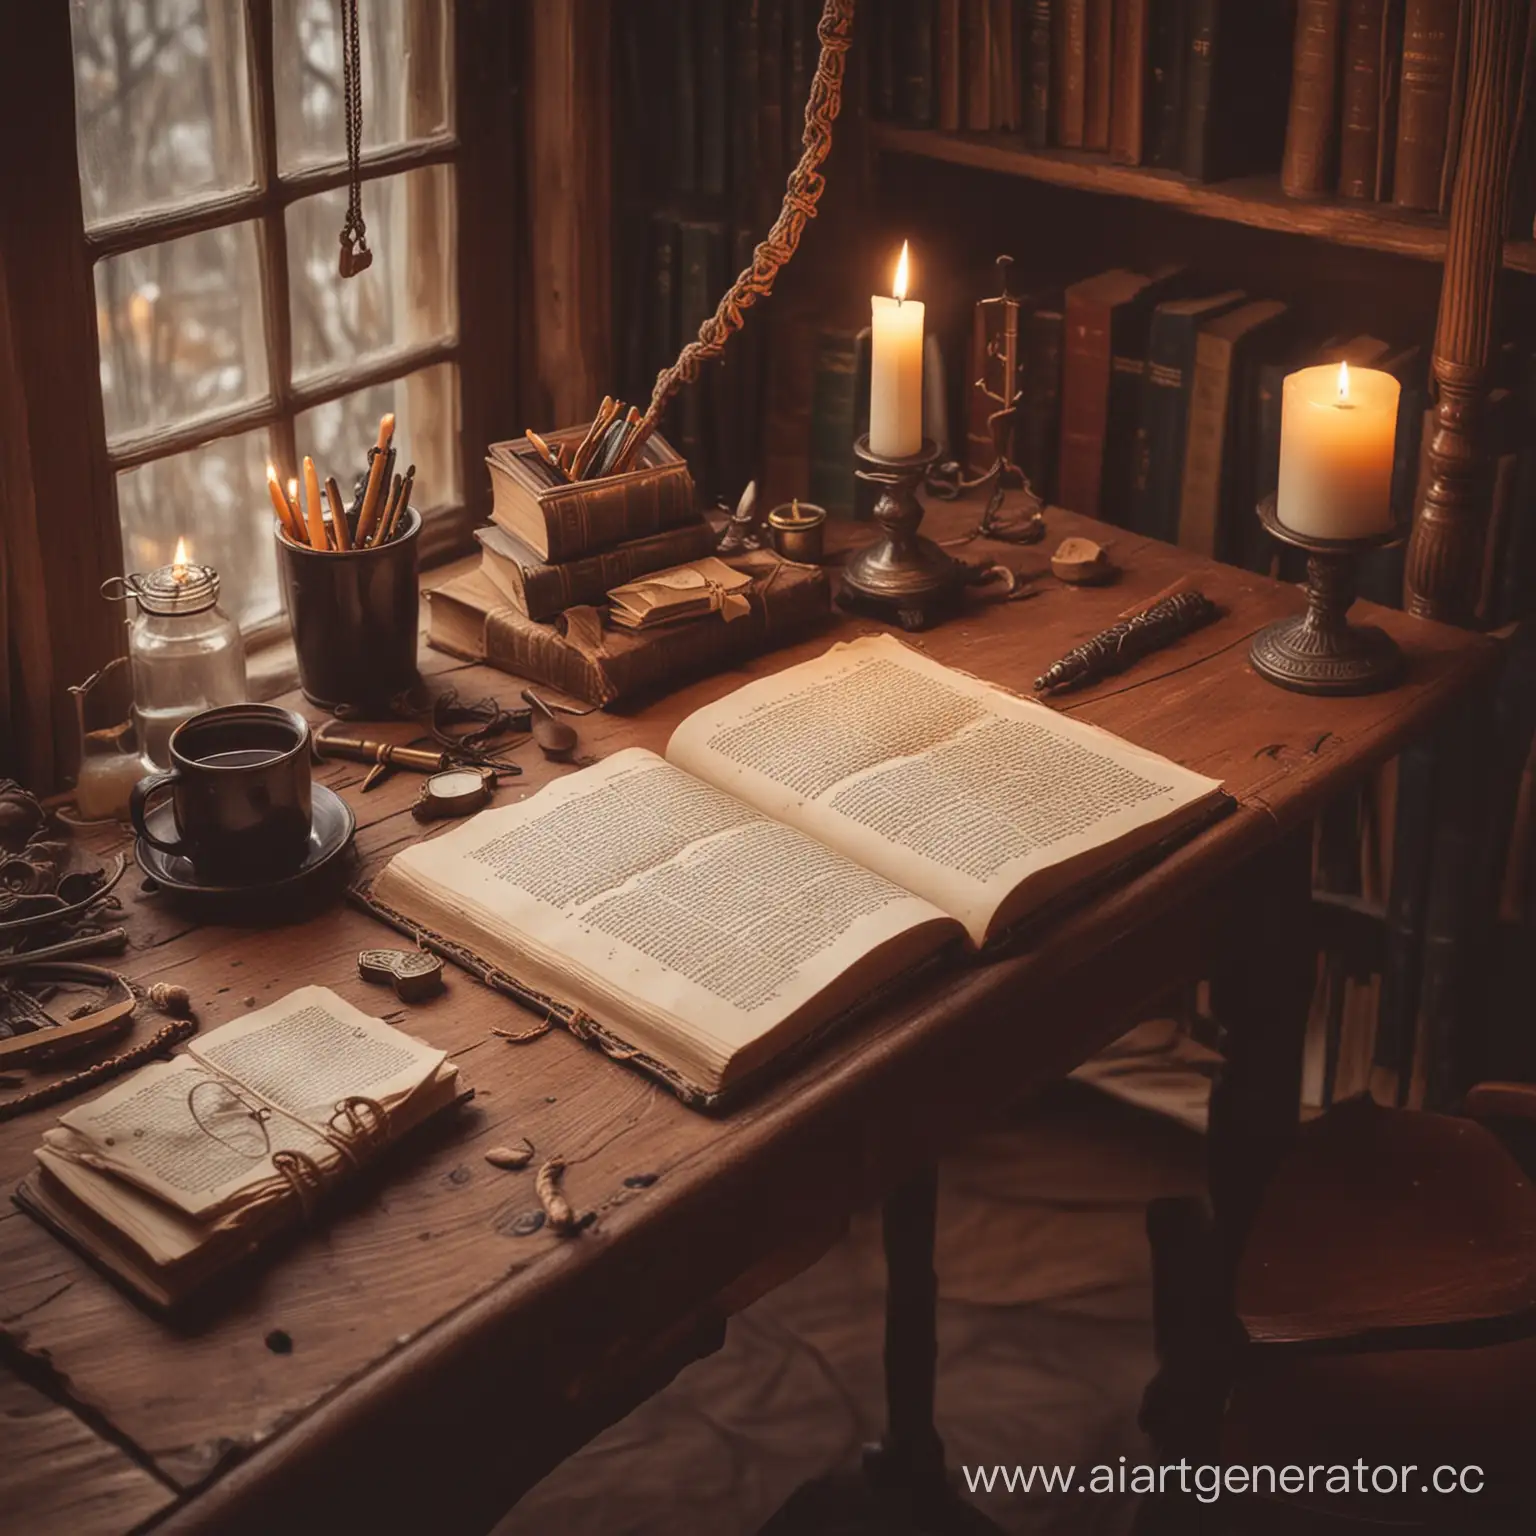 уютная комната писателя, на столе лежат книги, свиток на котором он писал свисает со стола